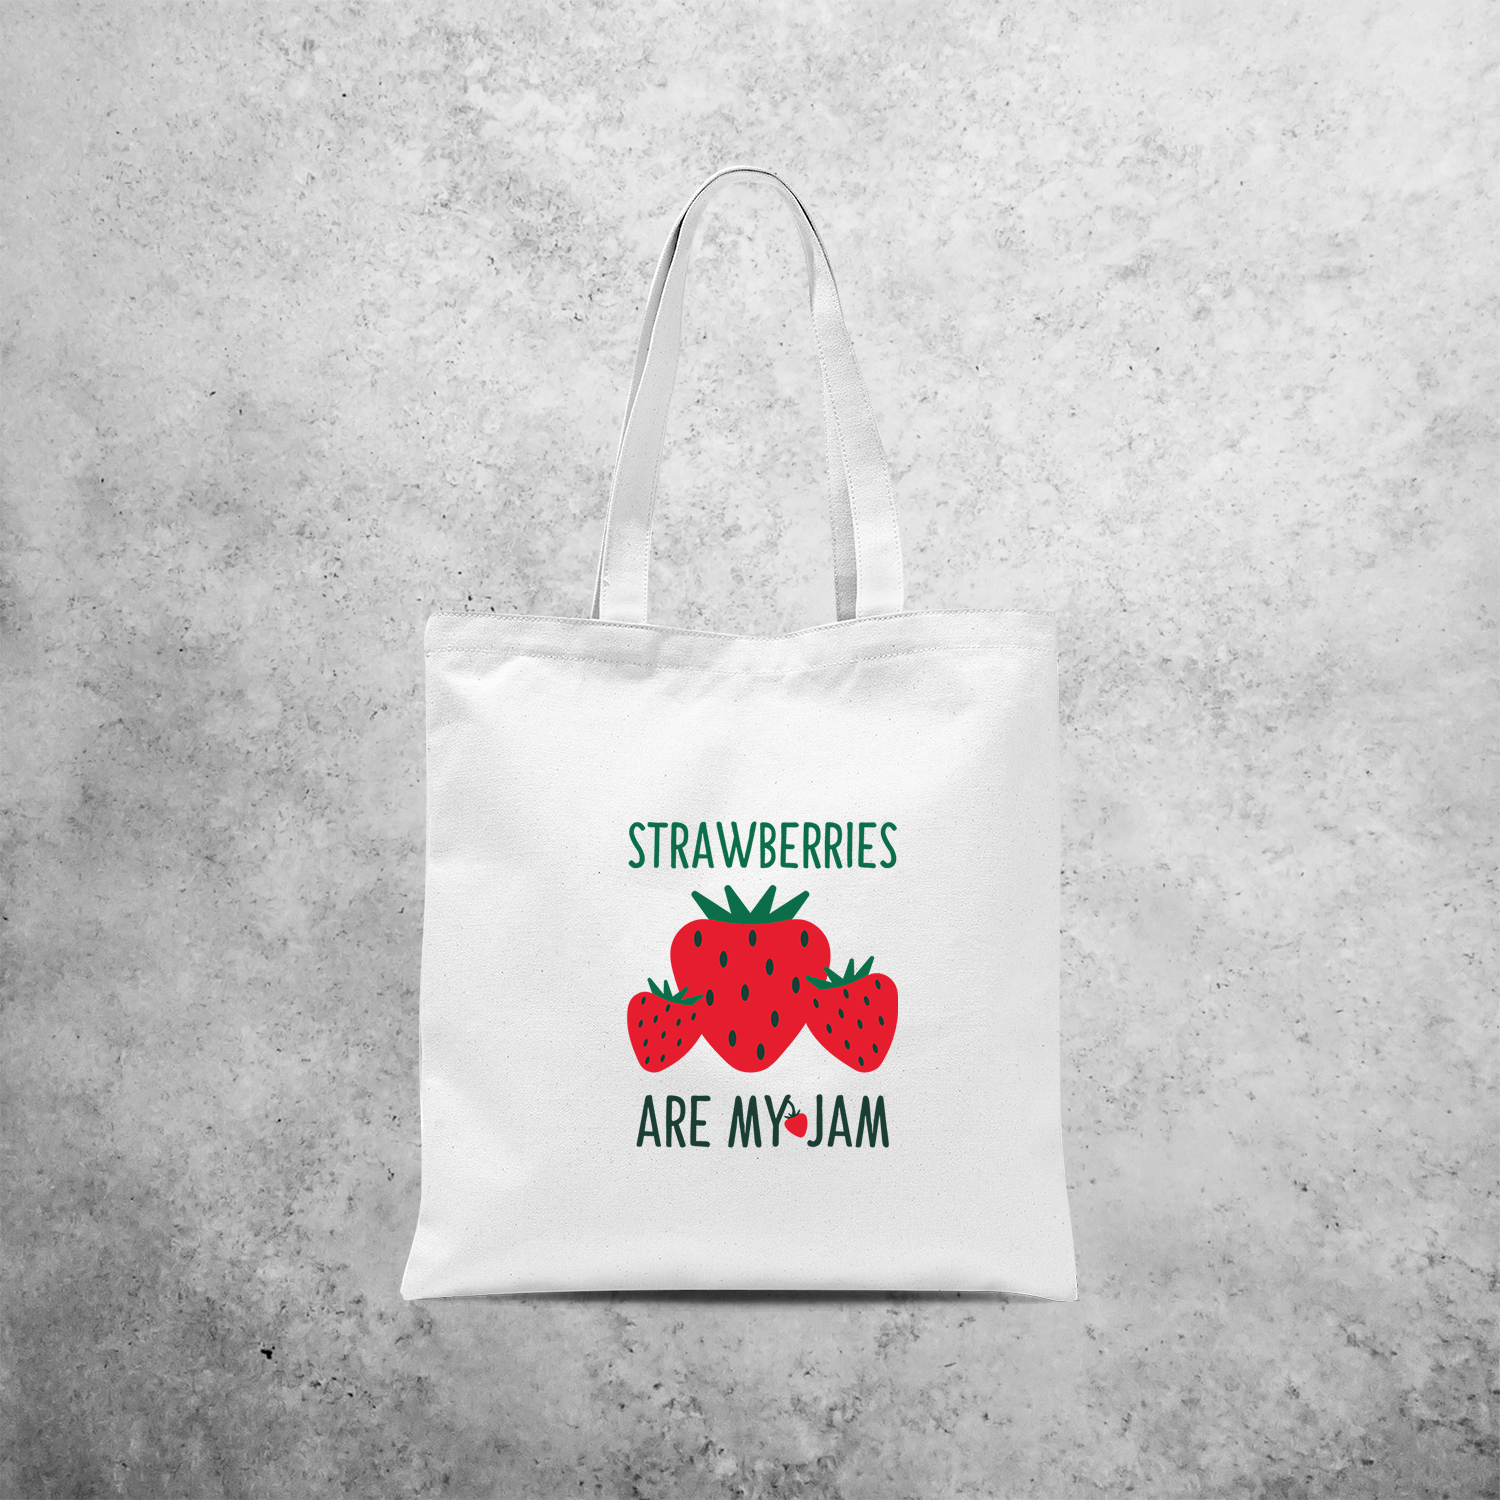 'Strawberries are my jam' tote bag